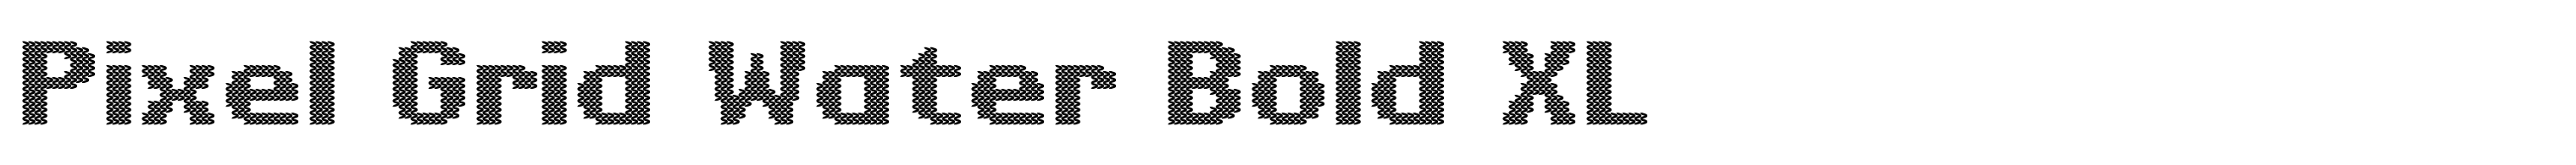 Pixel Grid Water Bold XL